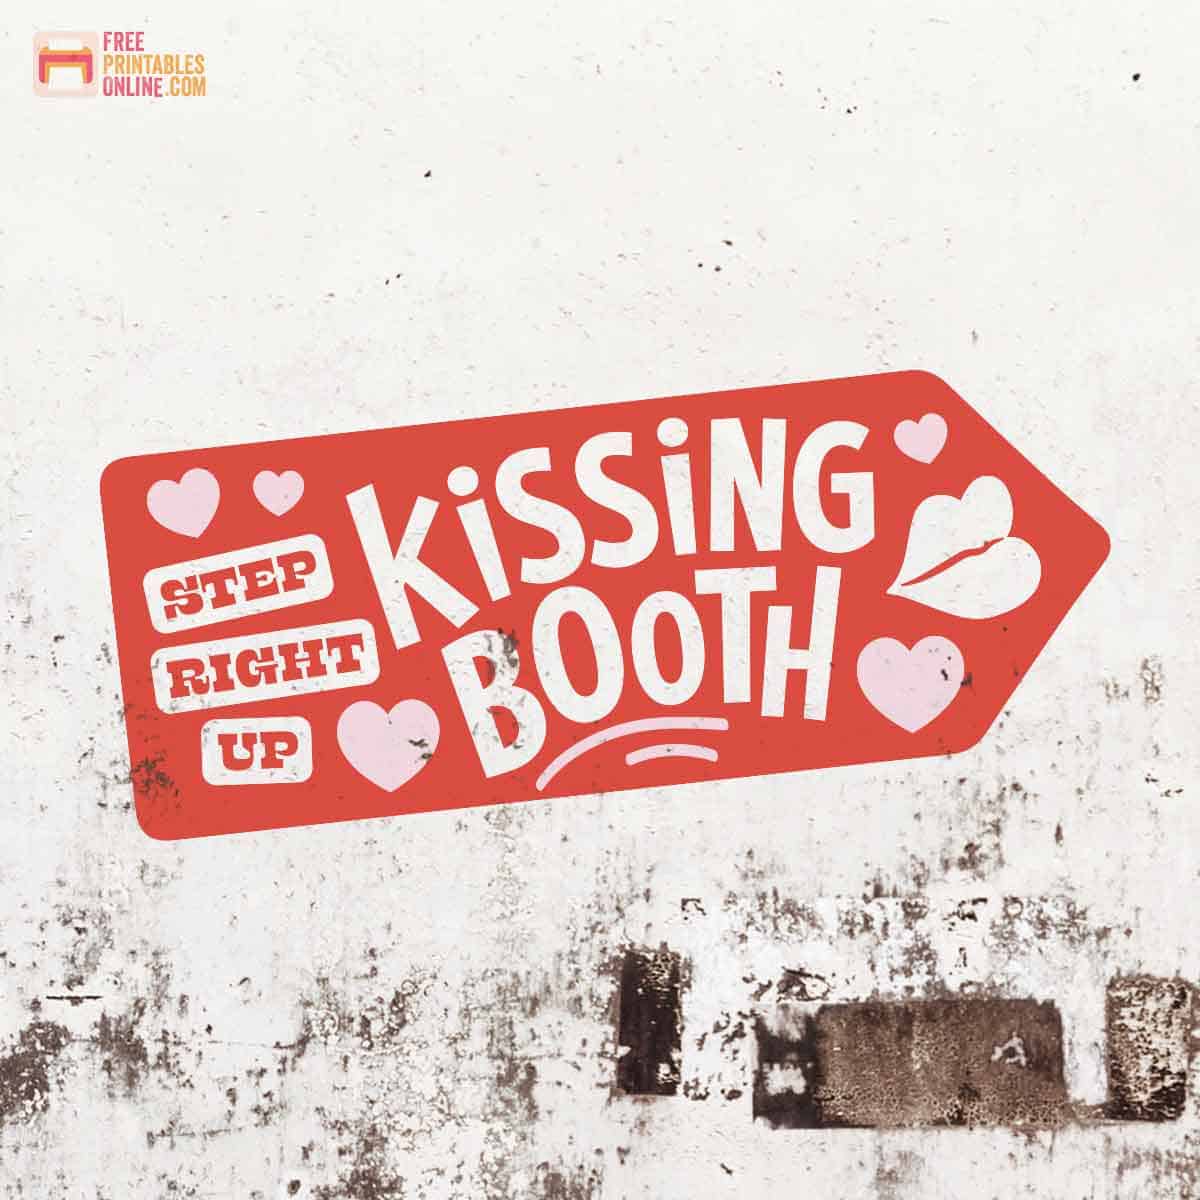 Free printable kissing booth sign LaptrinhX / News